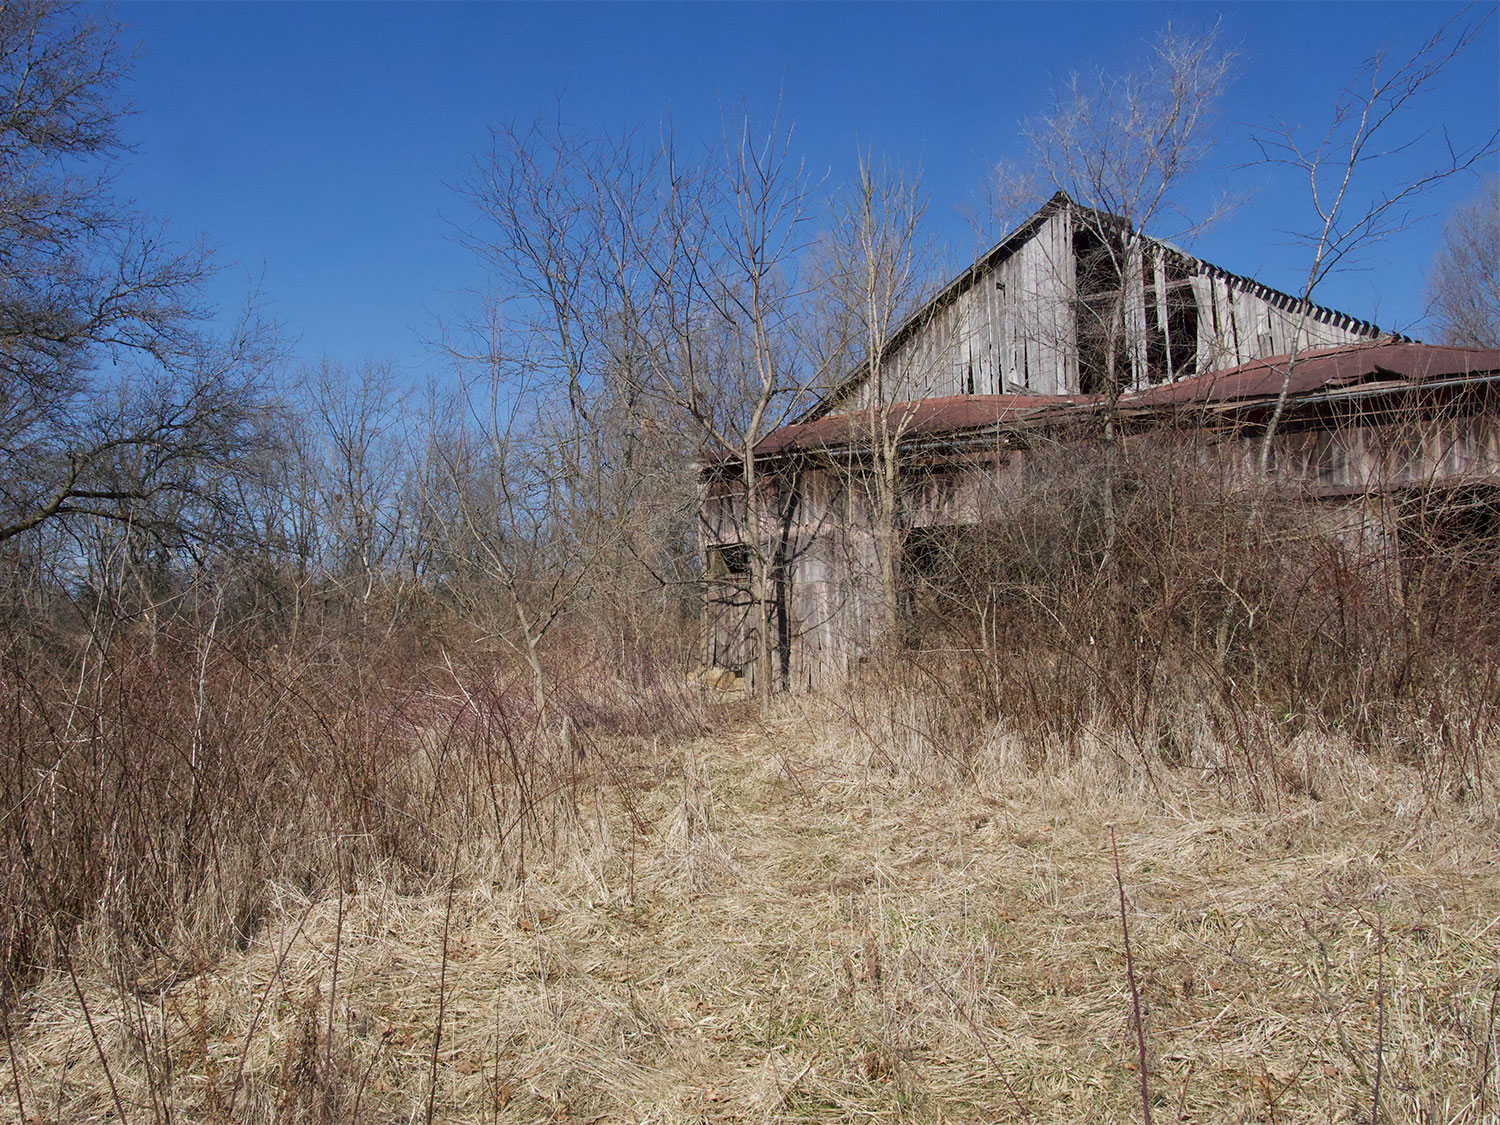 An abandoned dilapidated barn.